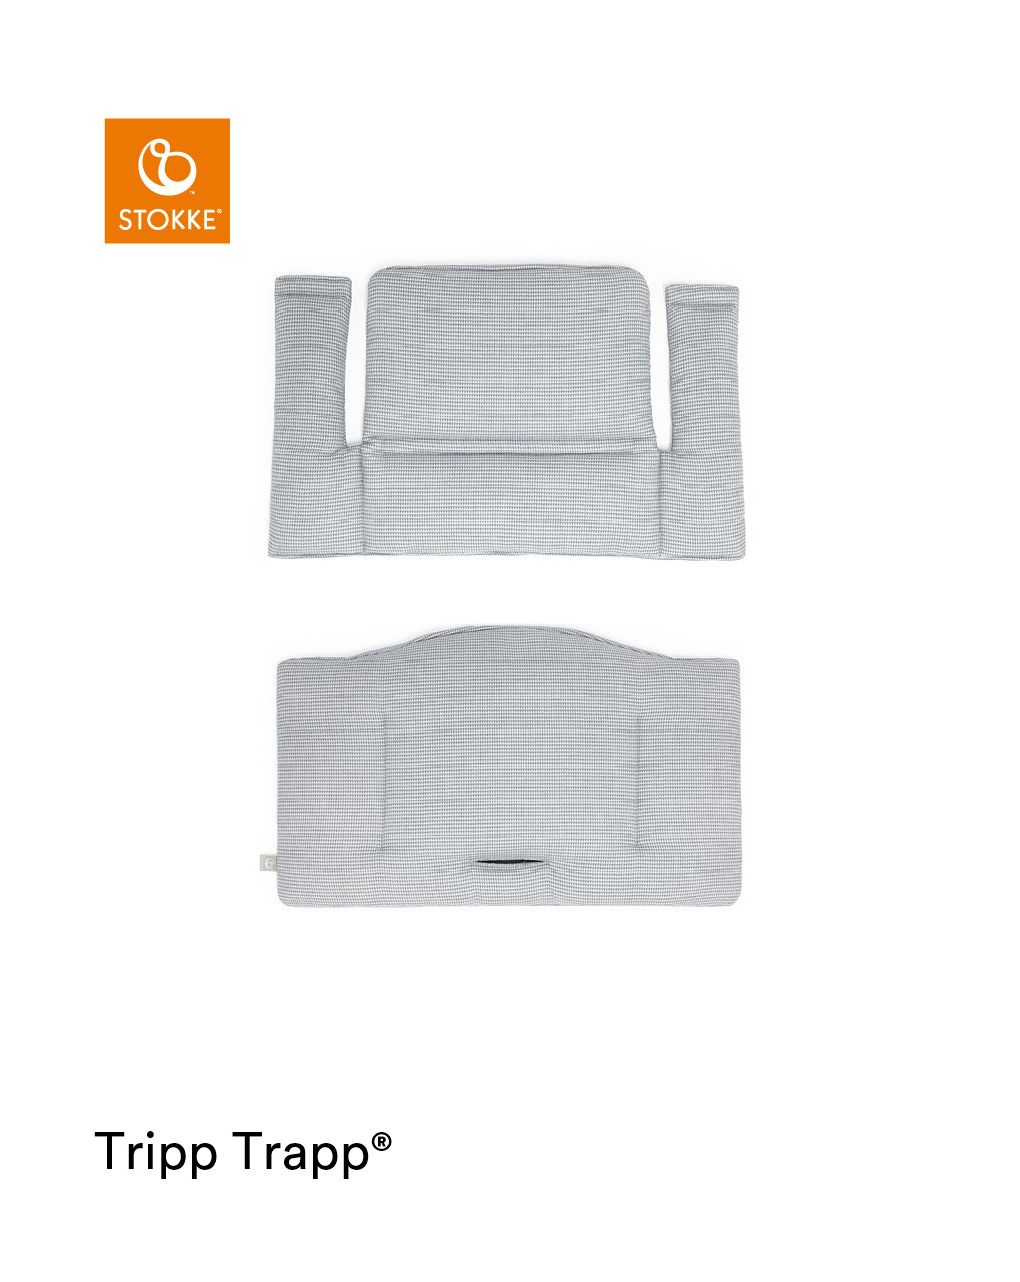 Tripp trapp® classic cushion nordic blue ocs - Stokke